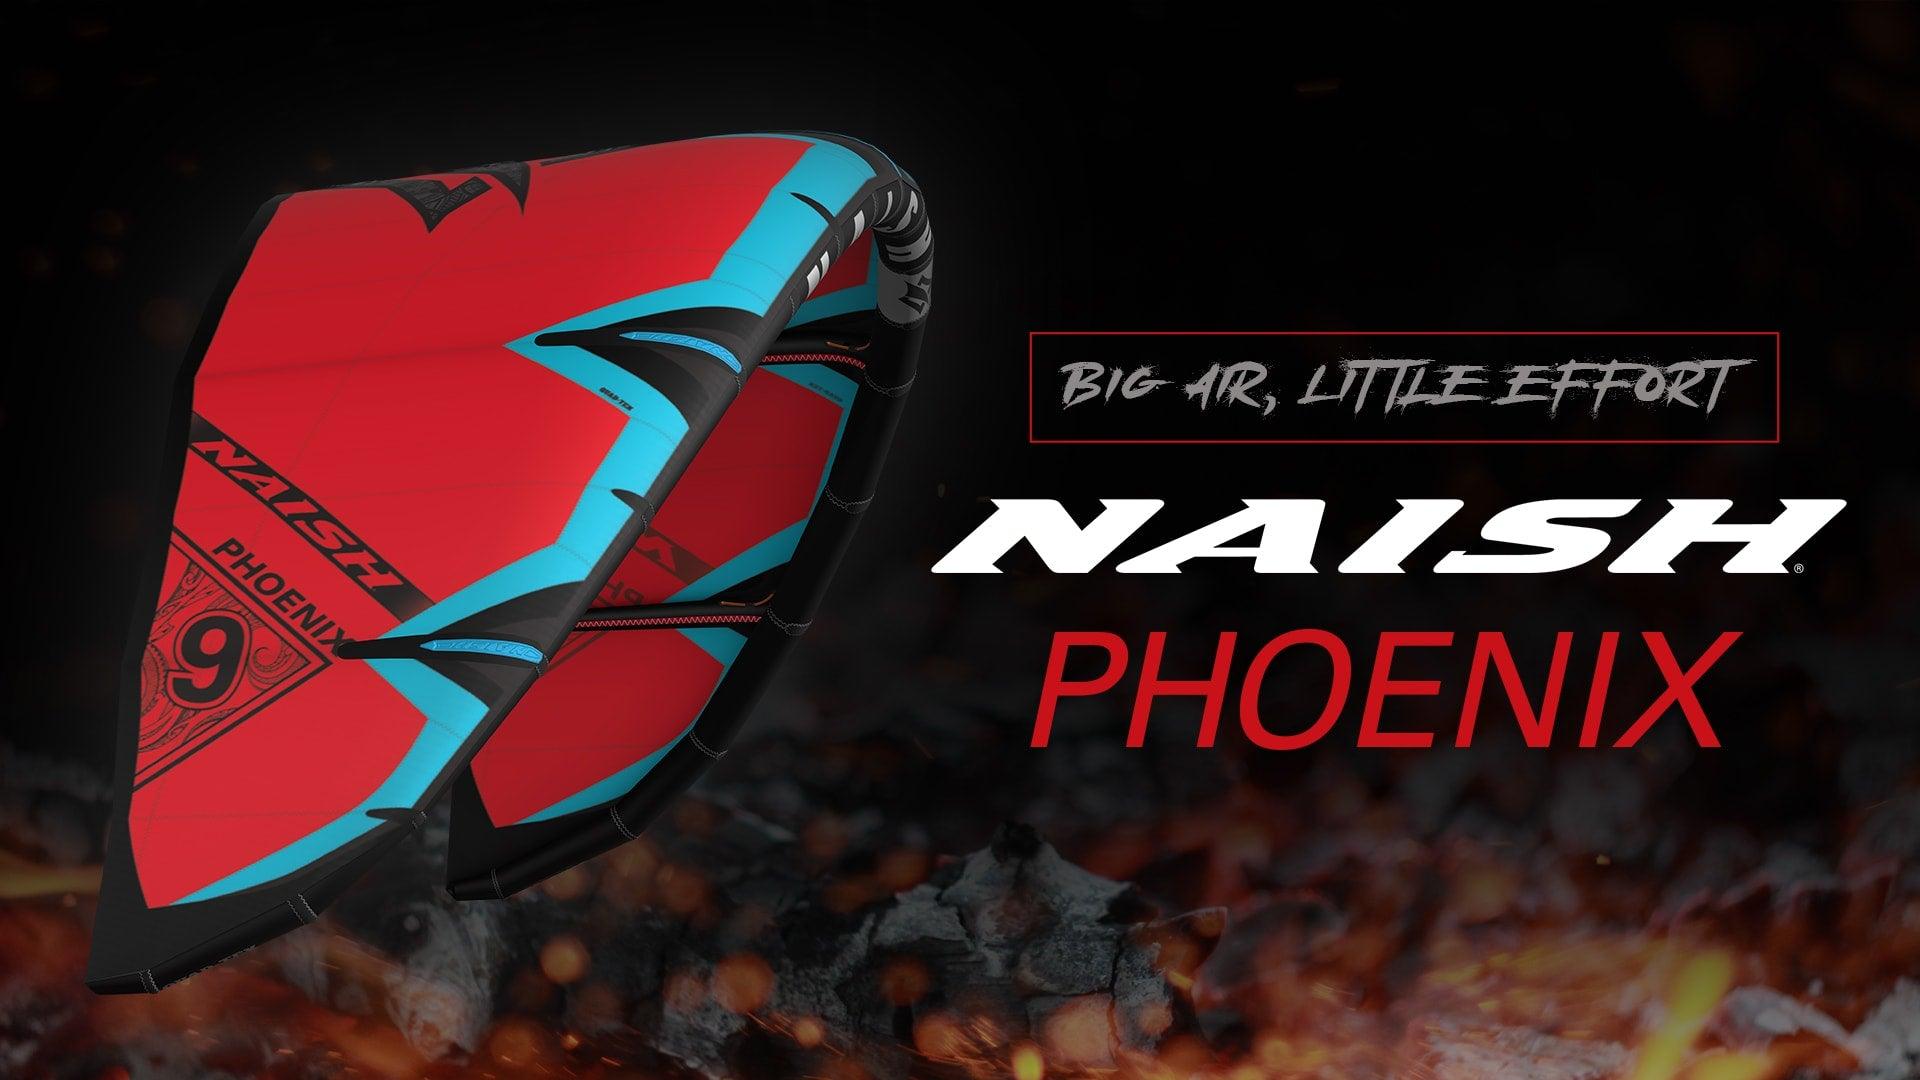 Big Air, Little Effort - New Phoenix Kite - Naish.com